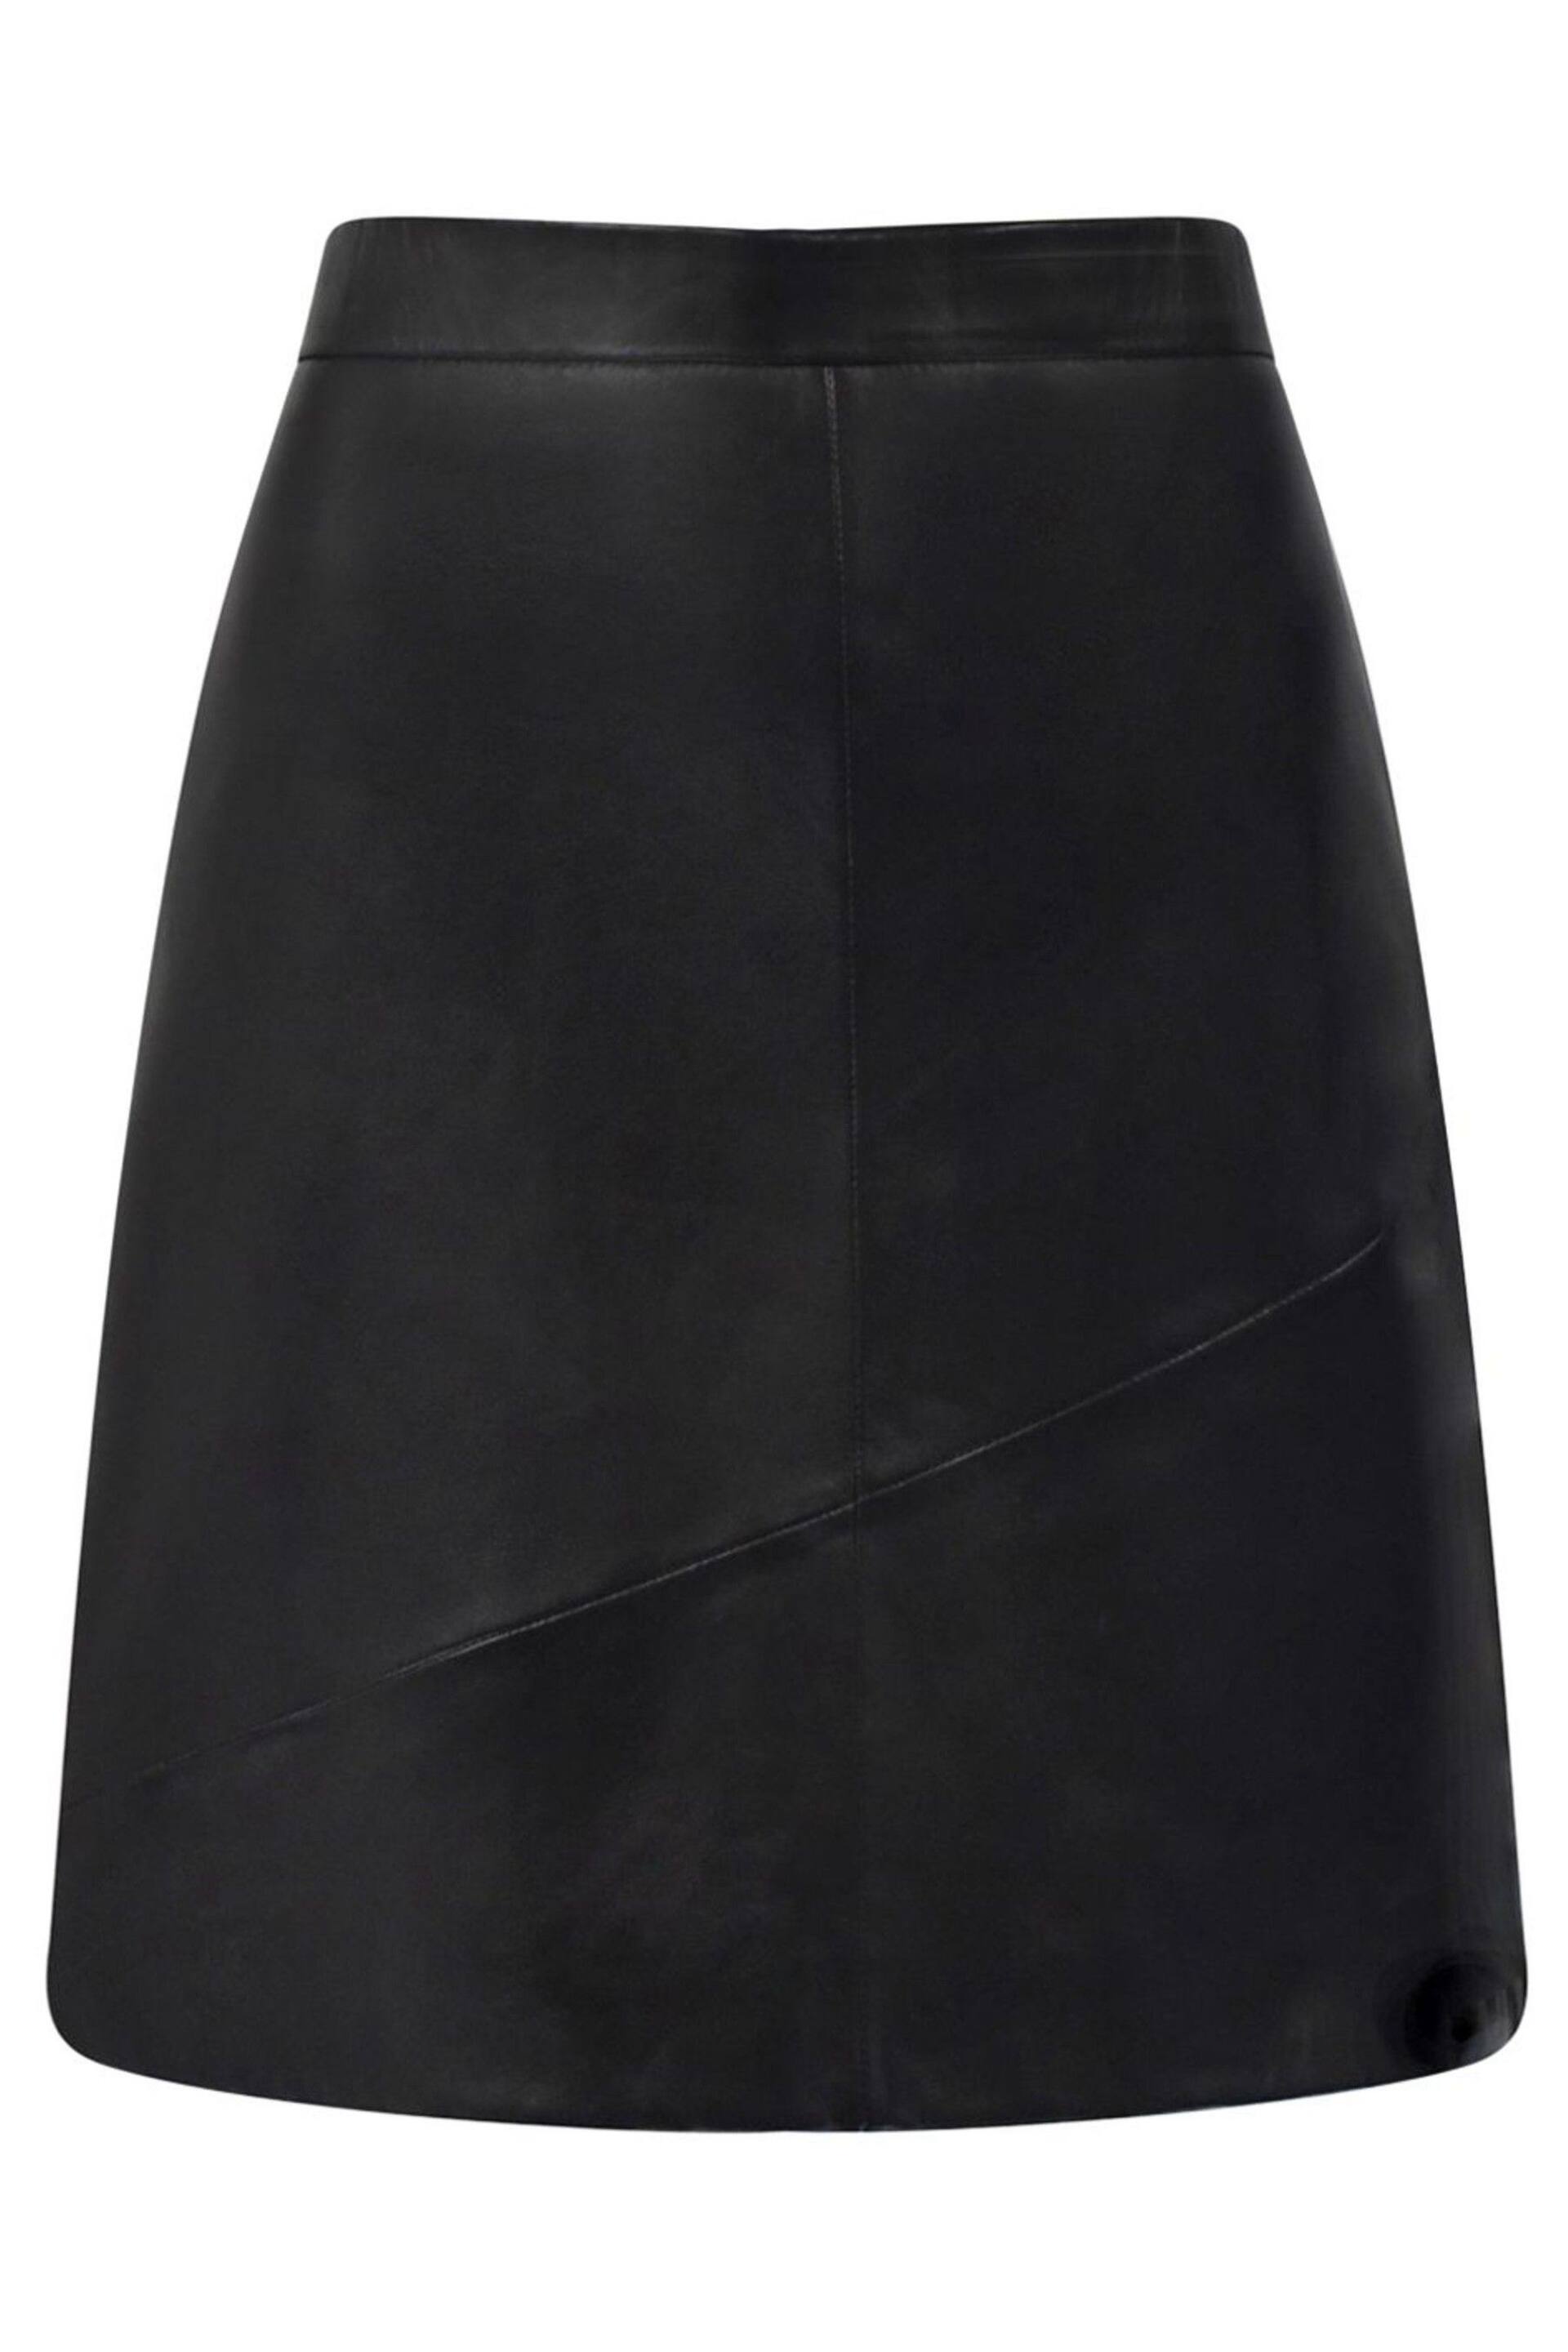 Ro&Zo Leather Mini Skirt - Image 3 of 4